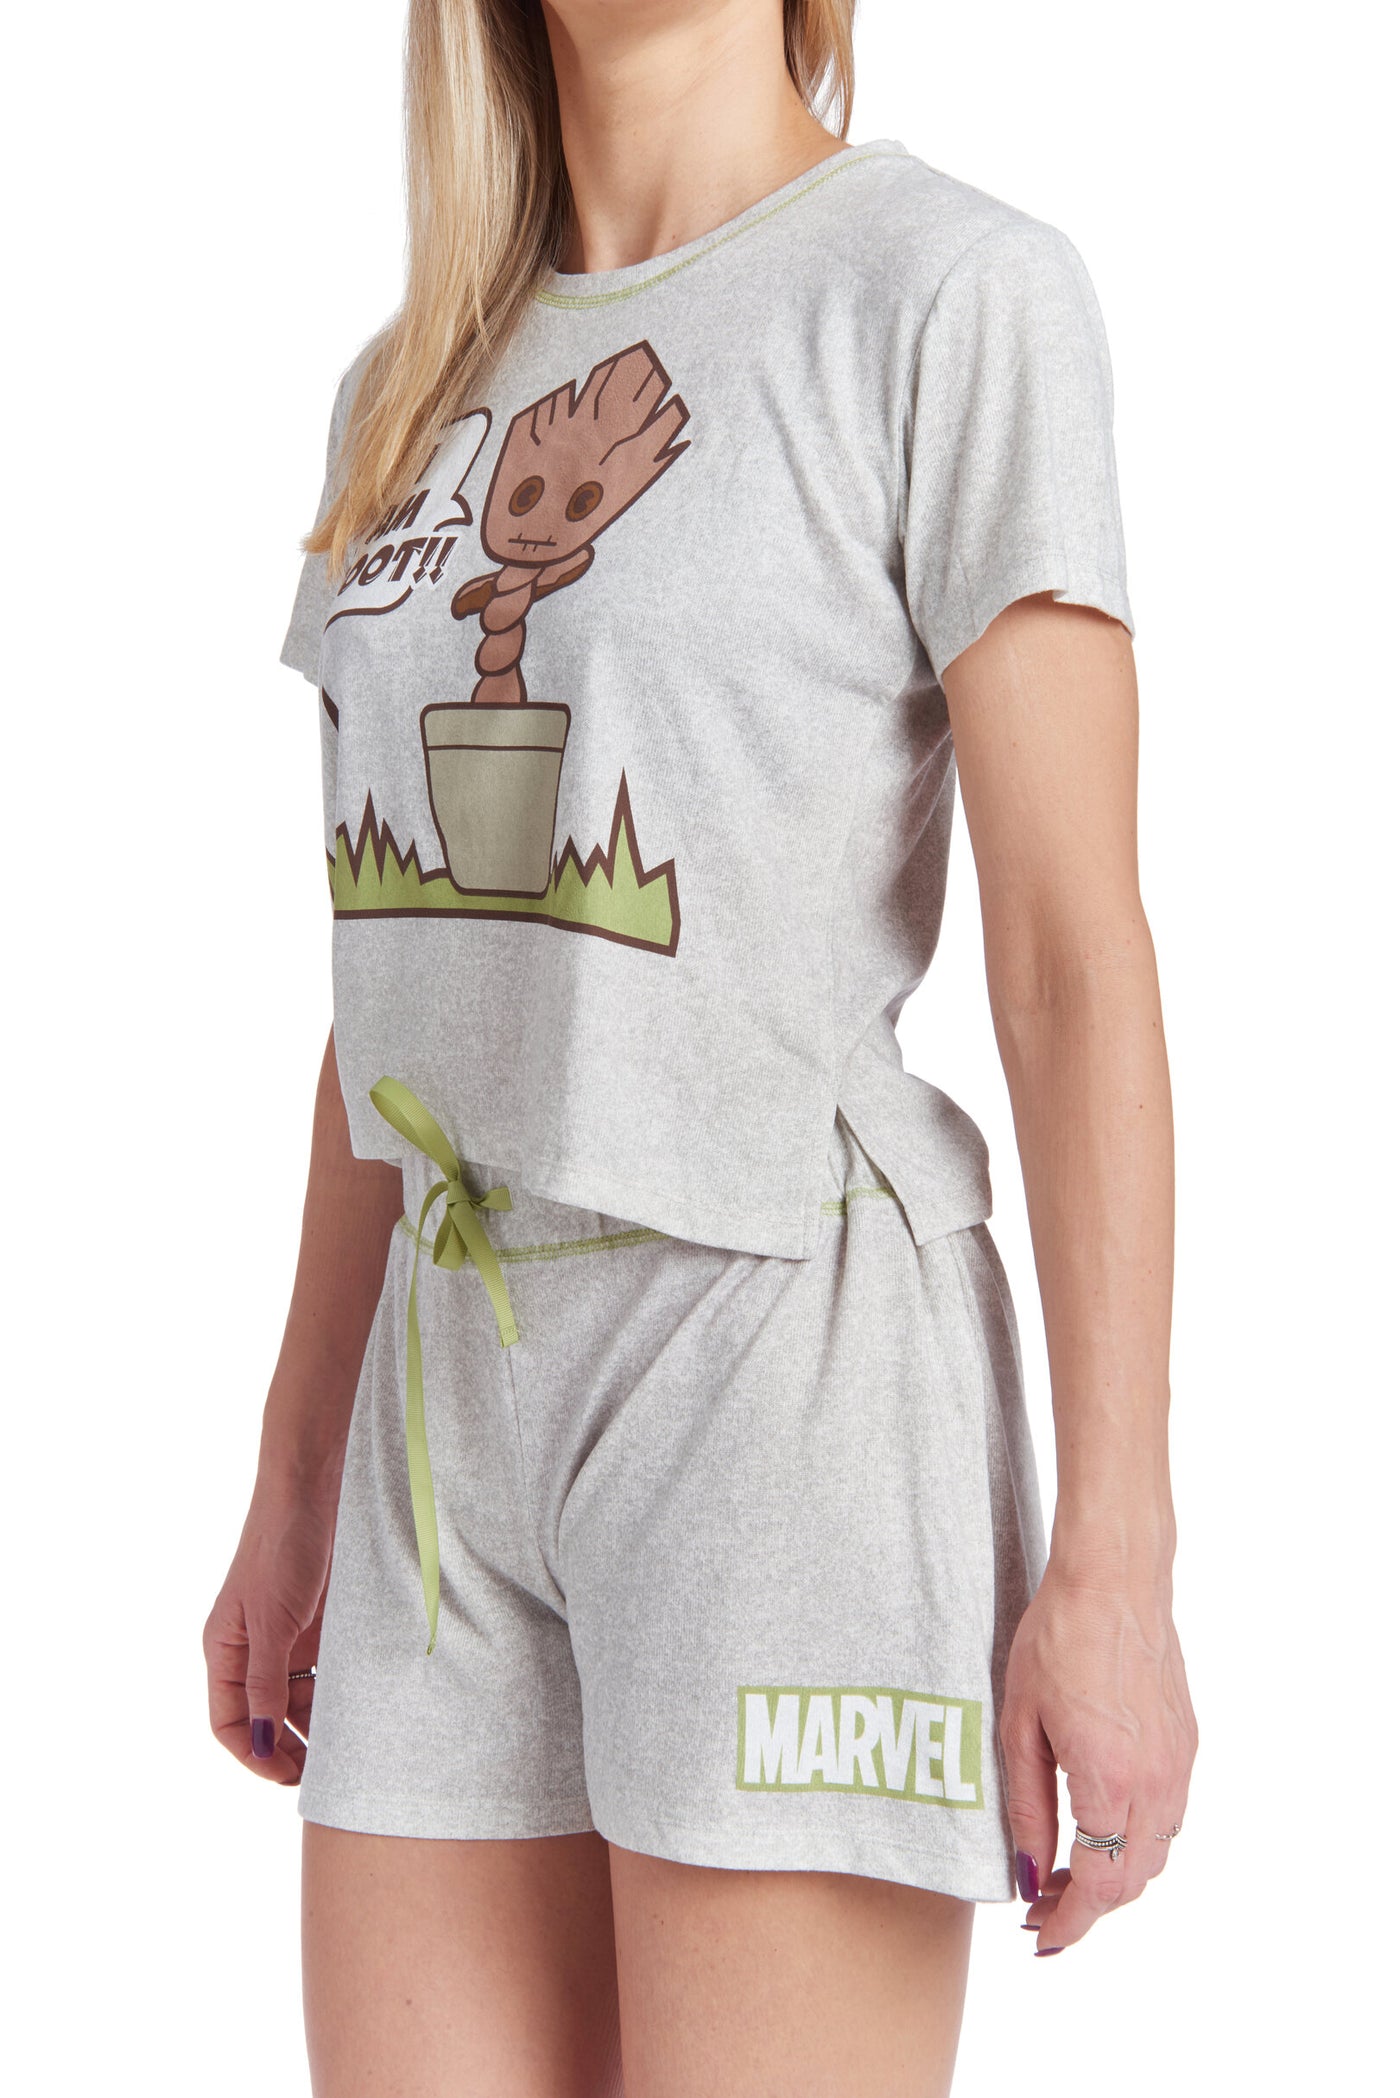 Marvel Guardians of the Galaxy Groot Pajama Shirt and Shorts Sleep Set